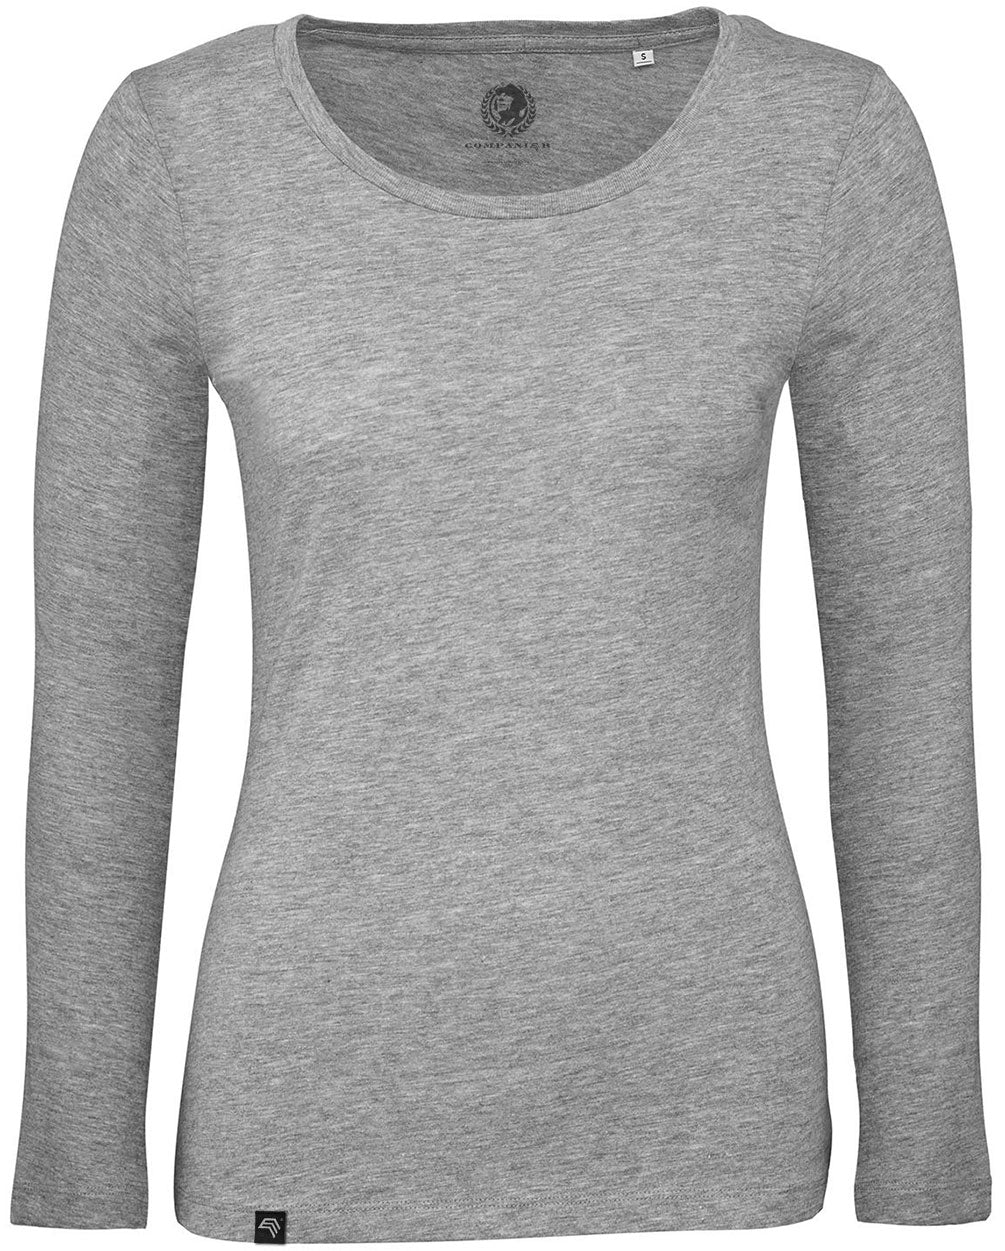 BAC TW071 ― Damen Bio-Baumwolle Langarm T-Shirt - Melange Heather Grau